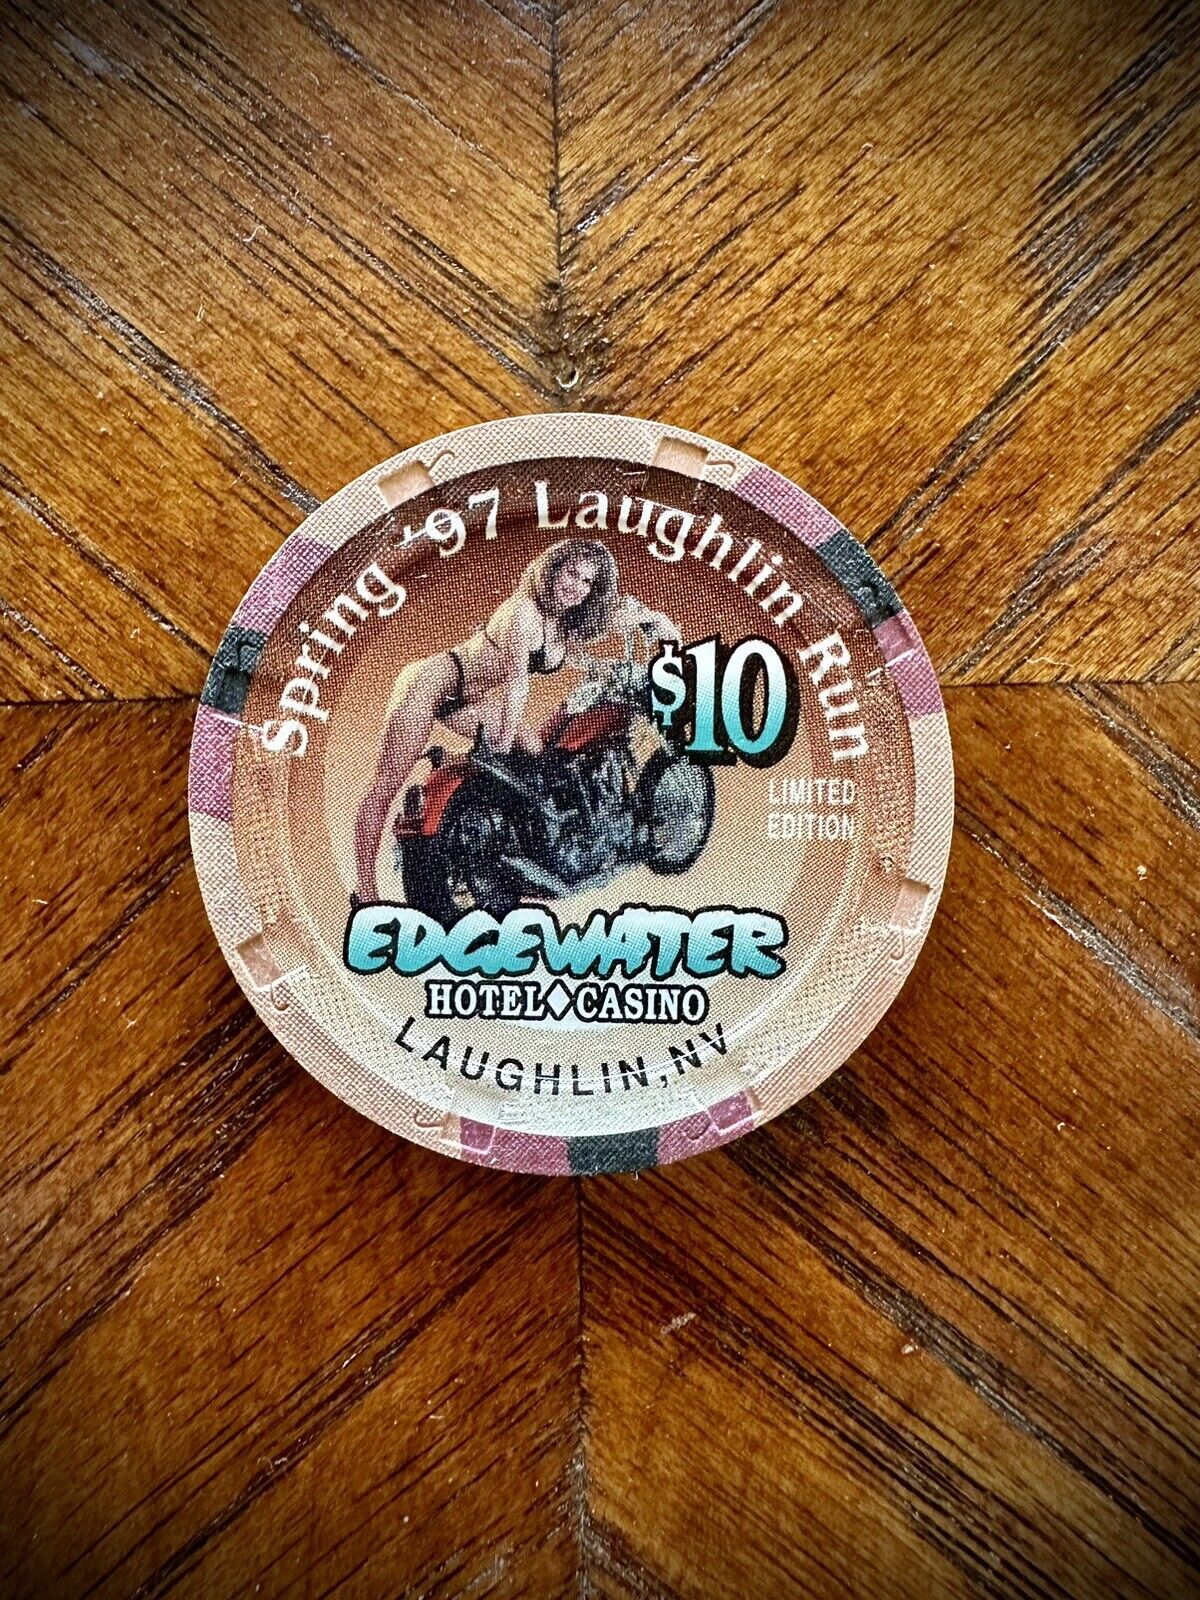 Nice $10 edgewater spring run 1997 laughlin nevada  Biker casino chip super rare